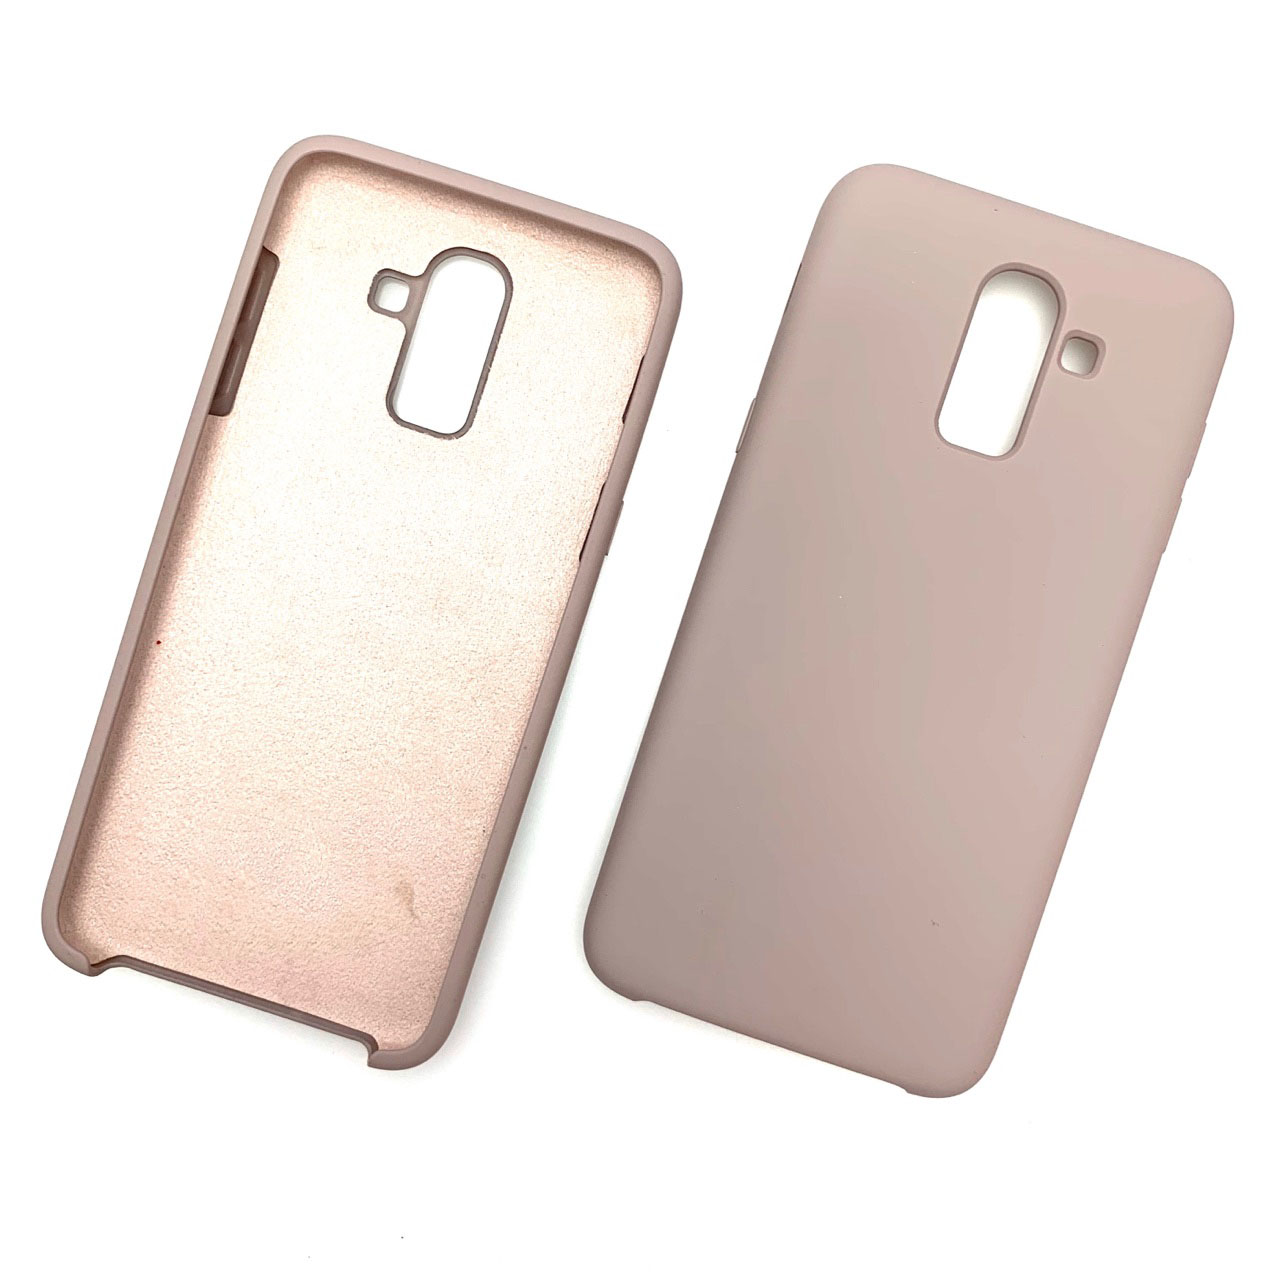 Чехол накладка Silicon Cover для SAMSUNG Galaxy J8 (SM-J800F), силикон, бархат, цвет белый навахо.